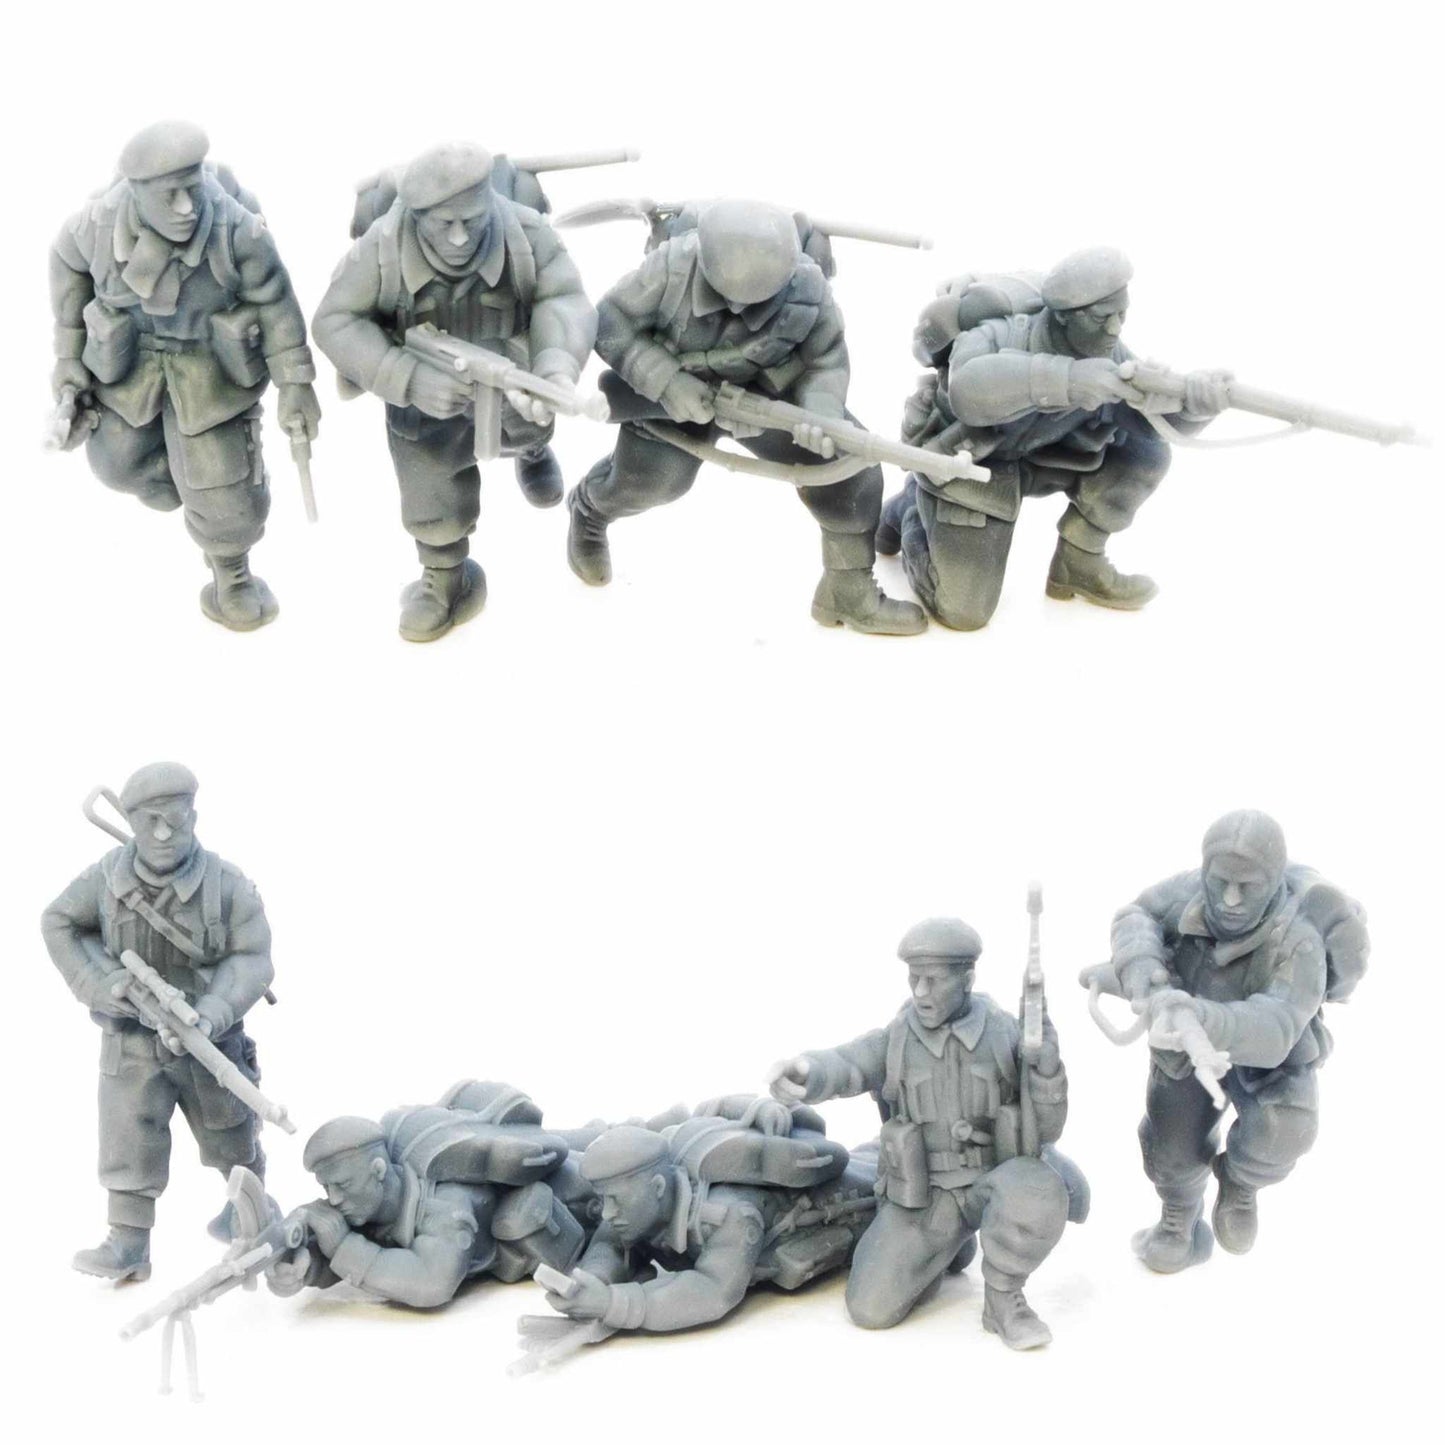 Commando Team by RKX Miniatures